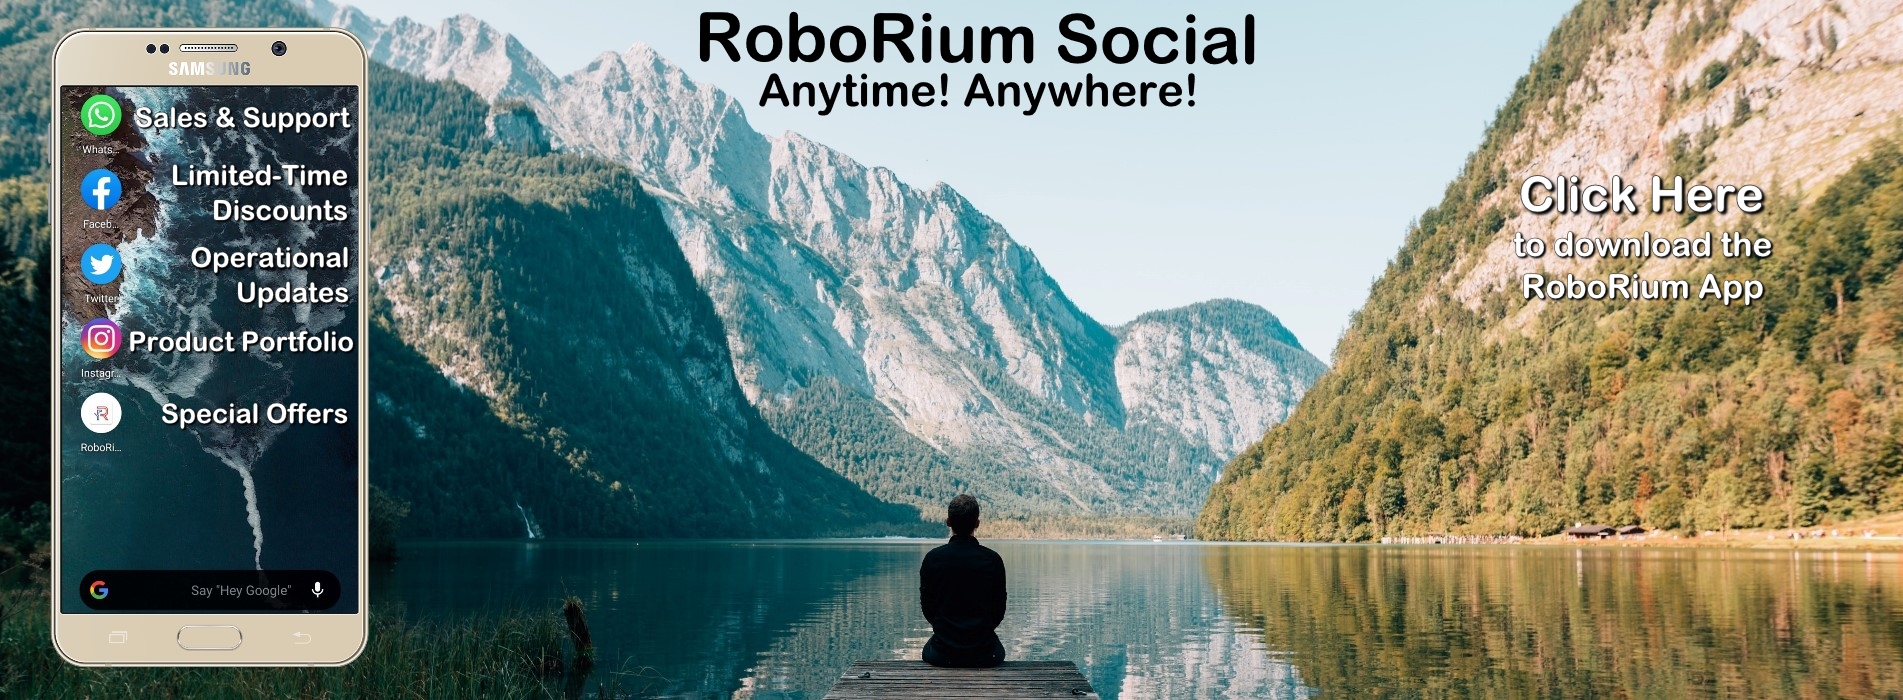 RoboRiumSocial